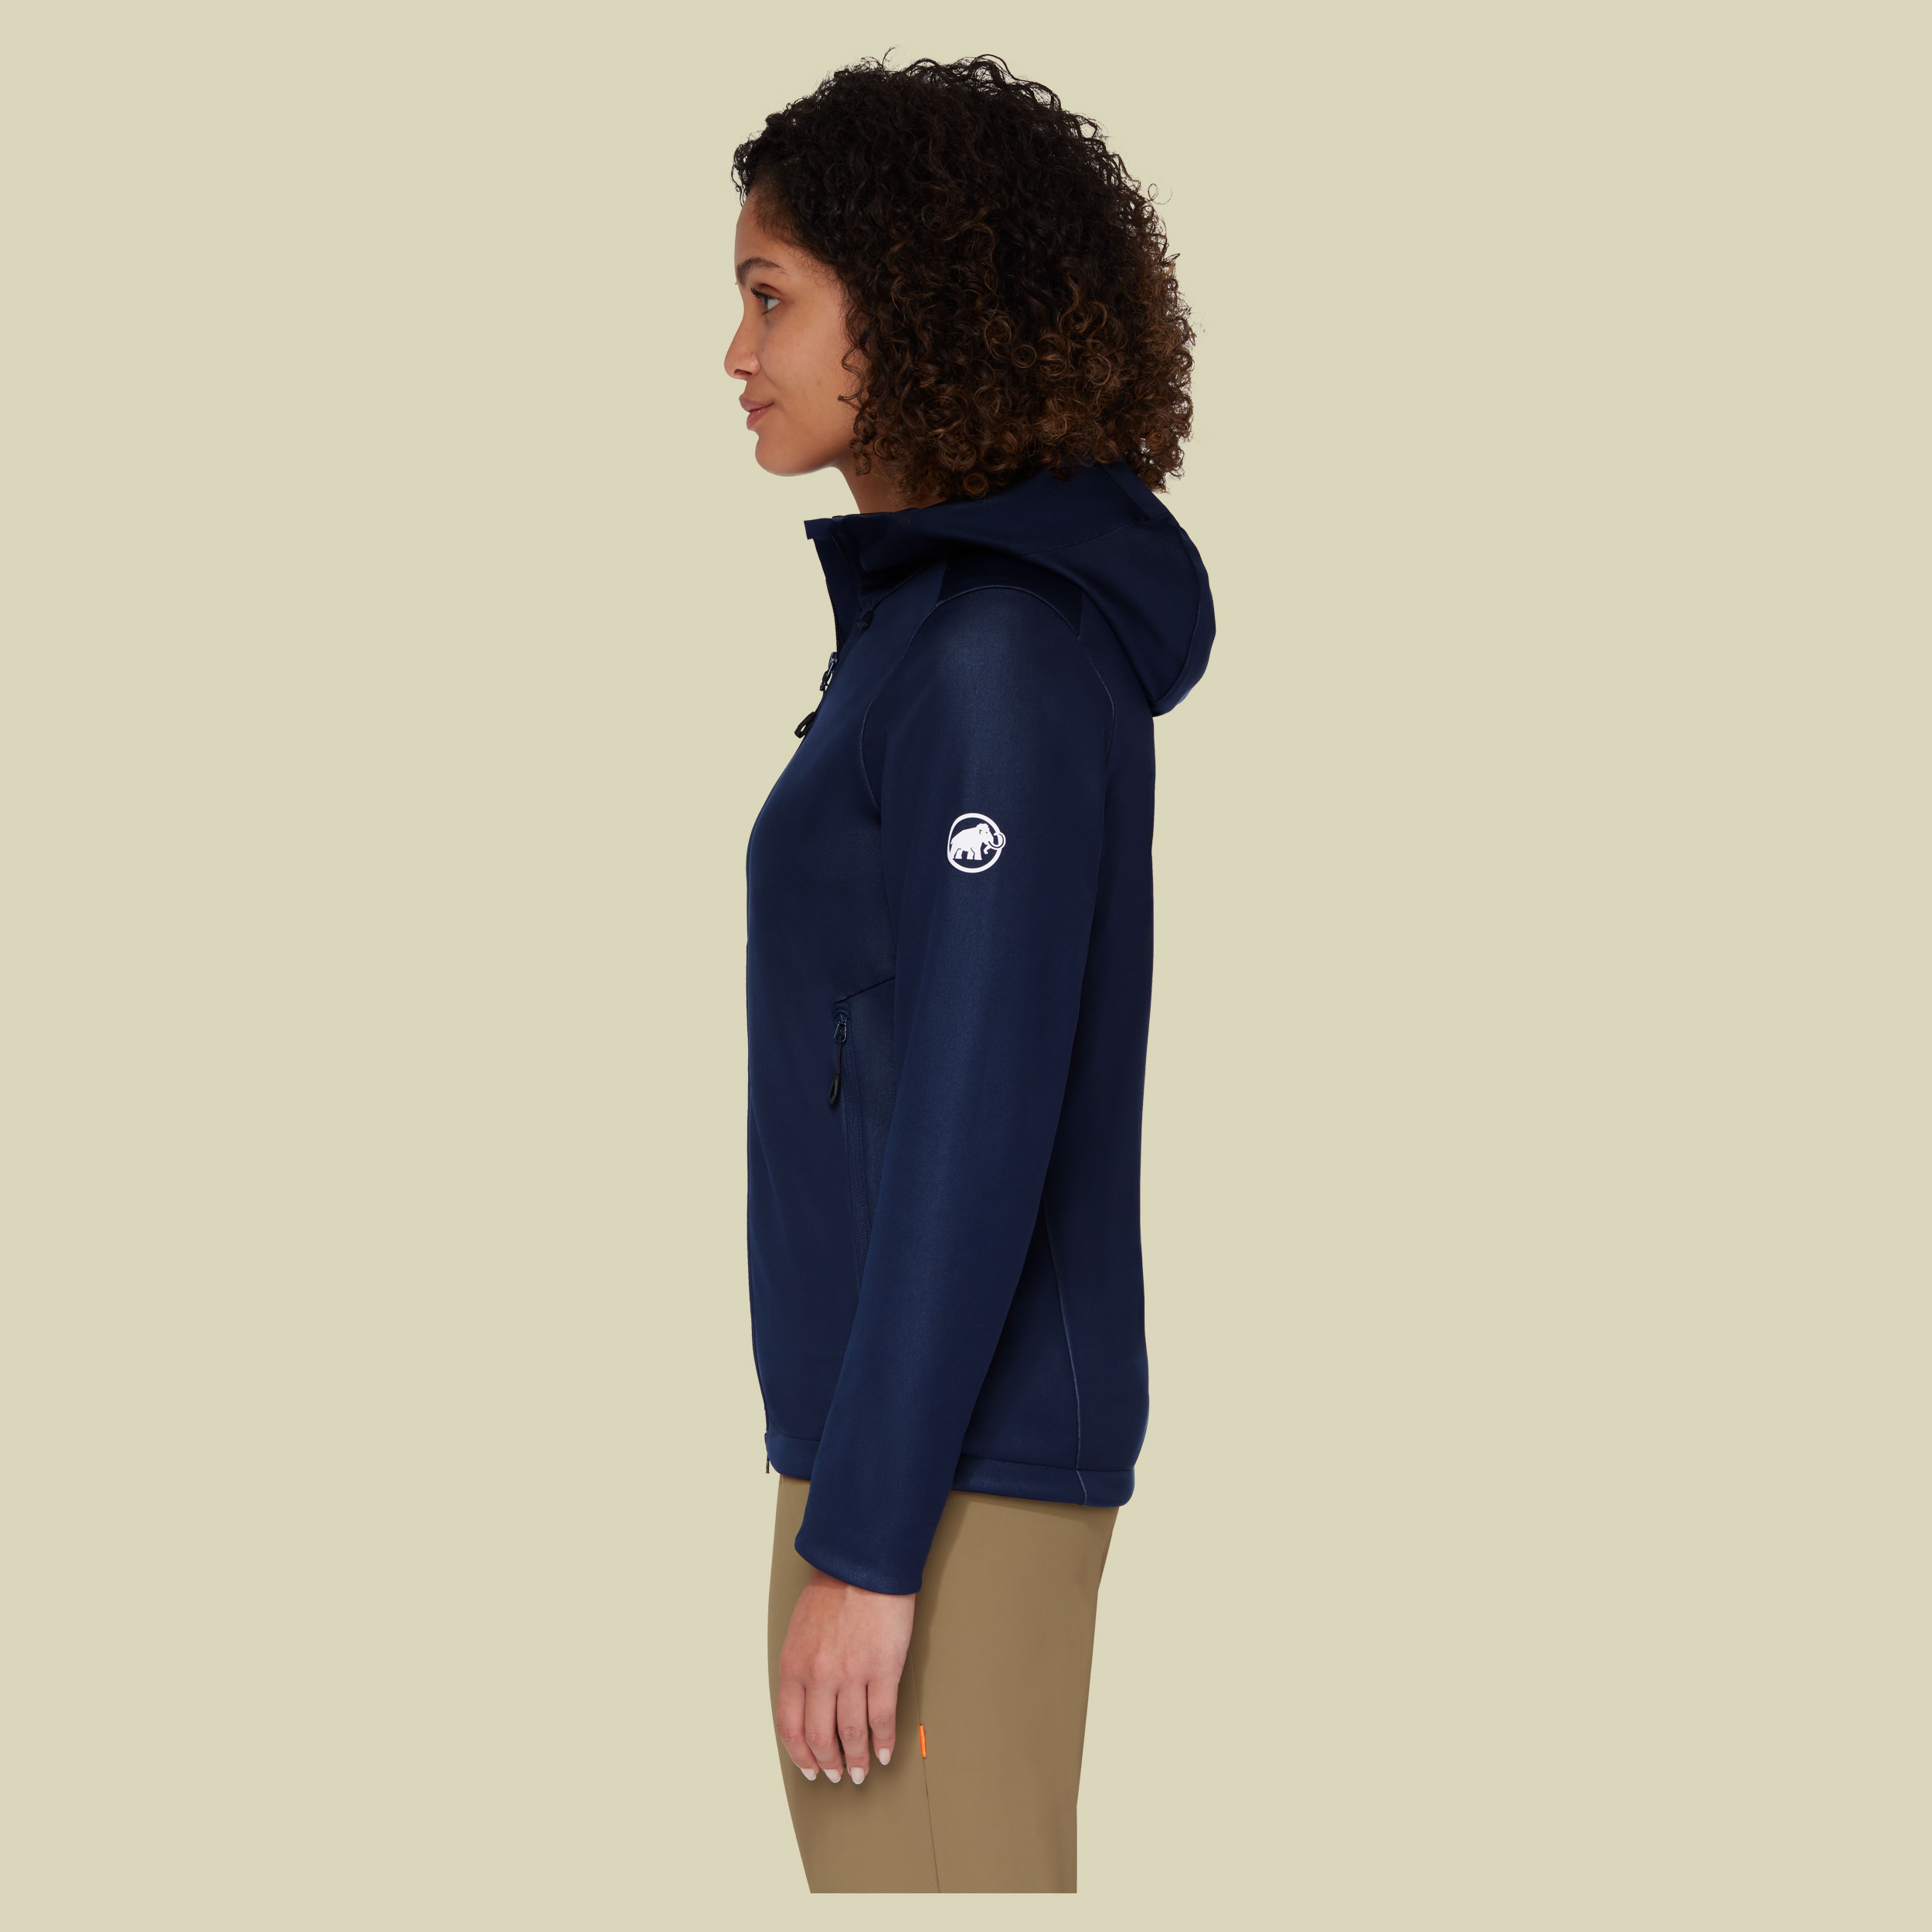 Ultimate VII SO Hooded Jacket Women Größe L  Farbe marine